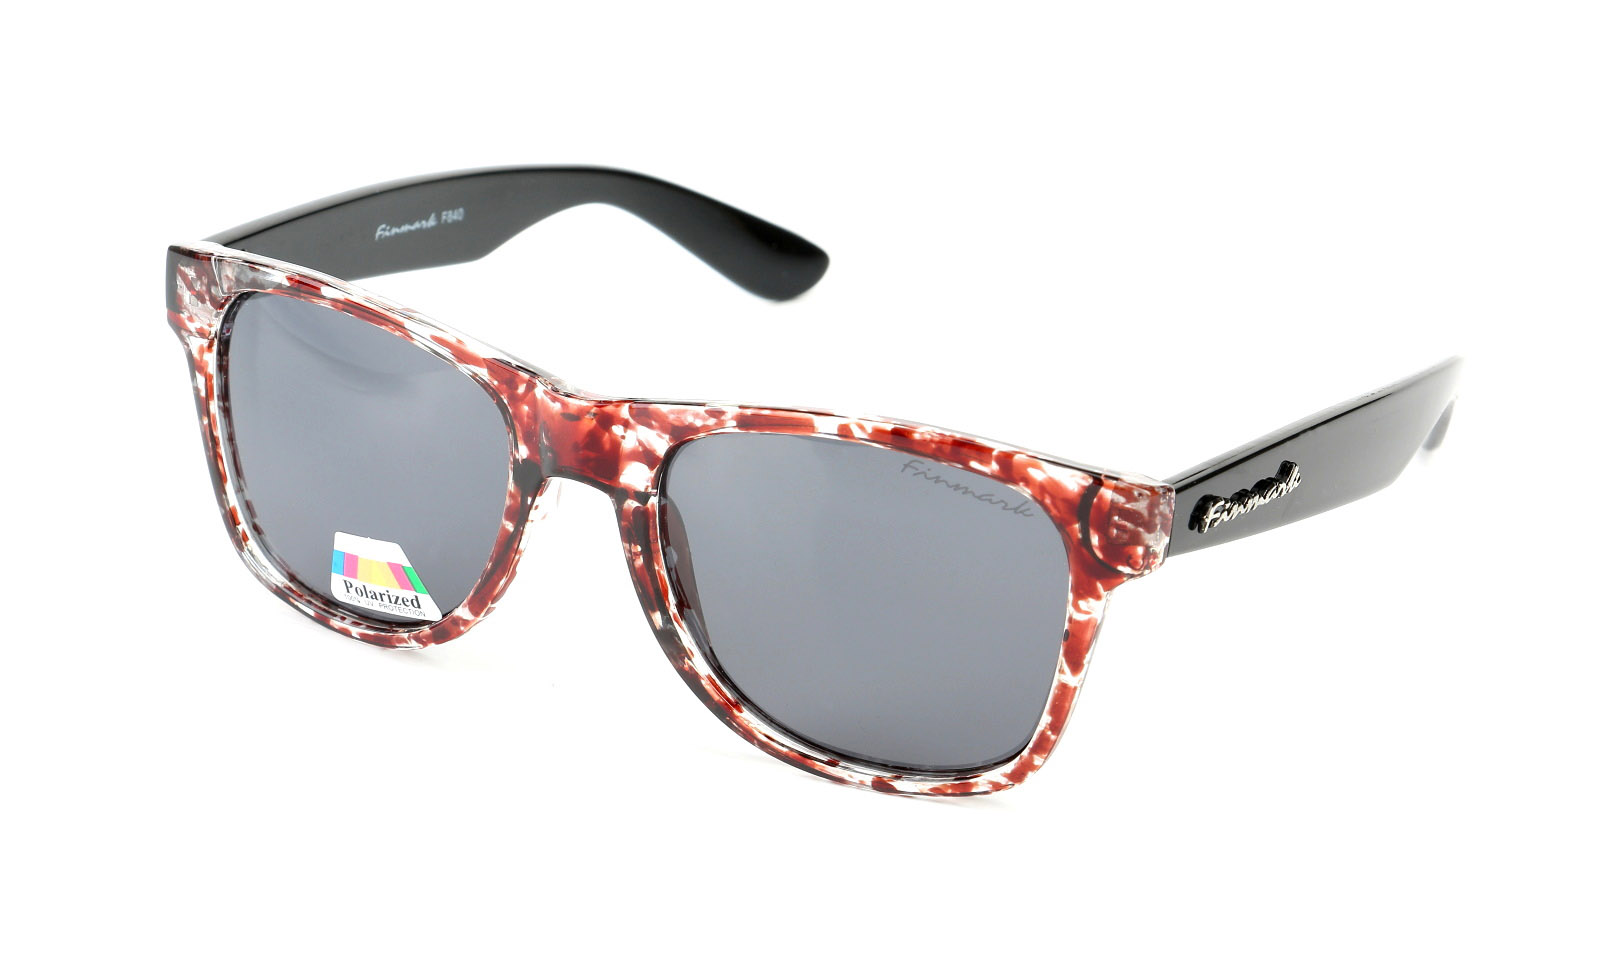 Fashion sunglasses with polarisation lenses